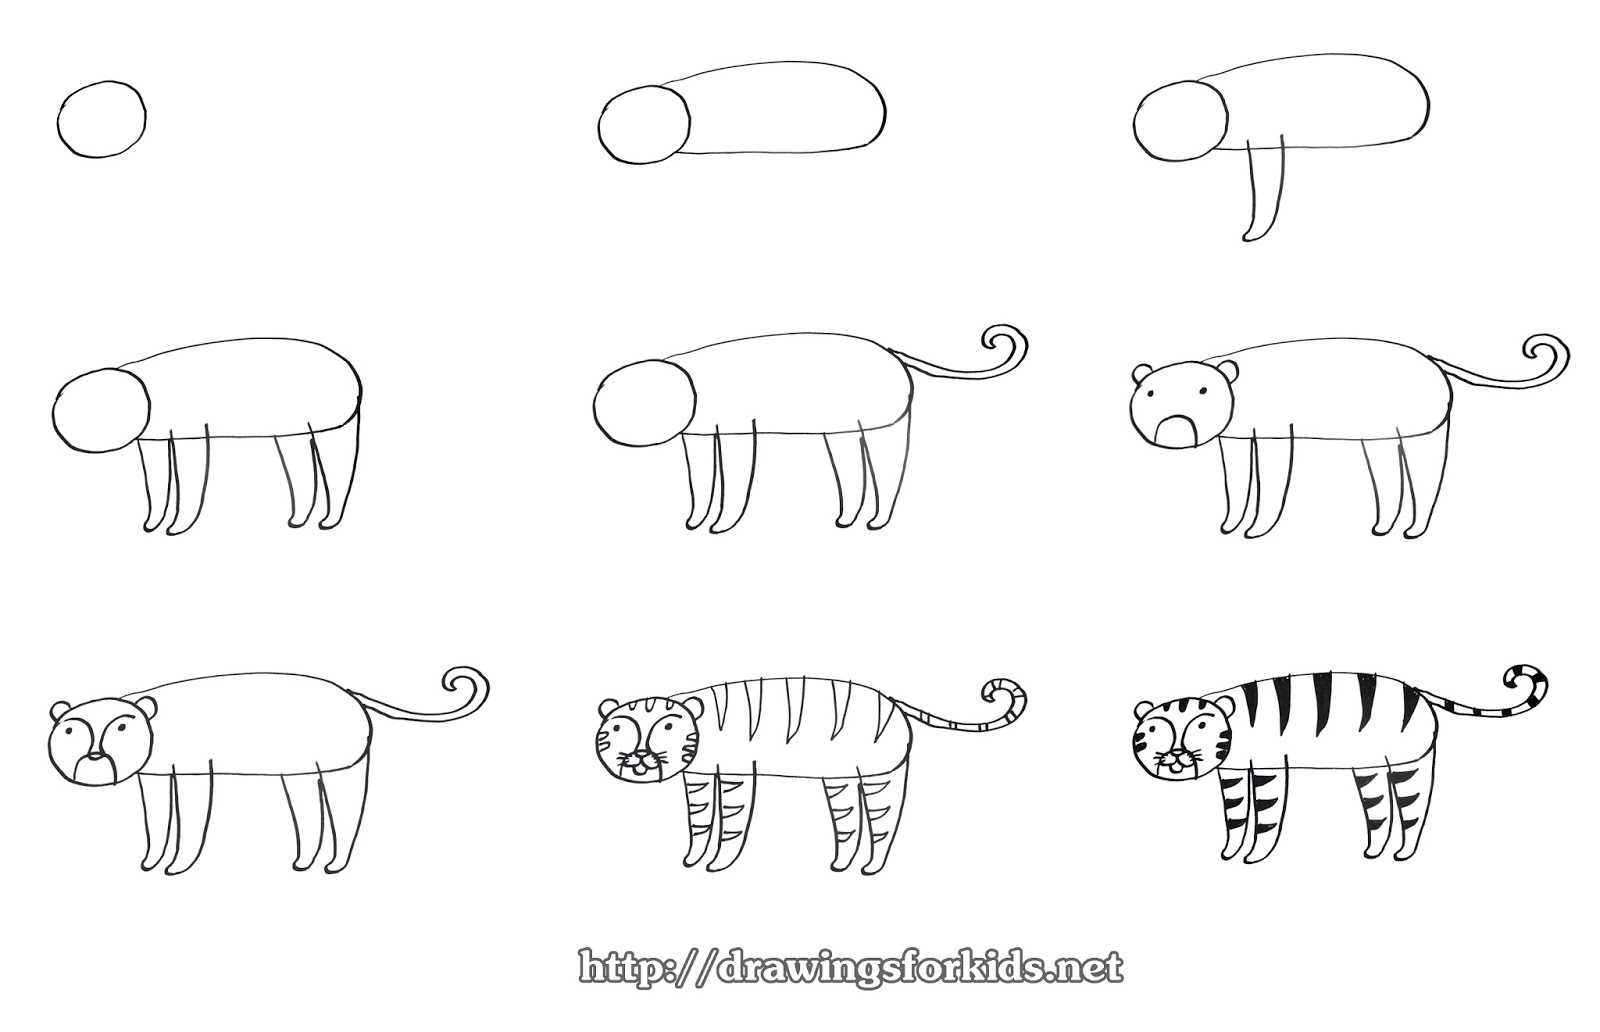 Как нарисовать тигра легко